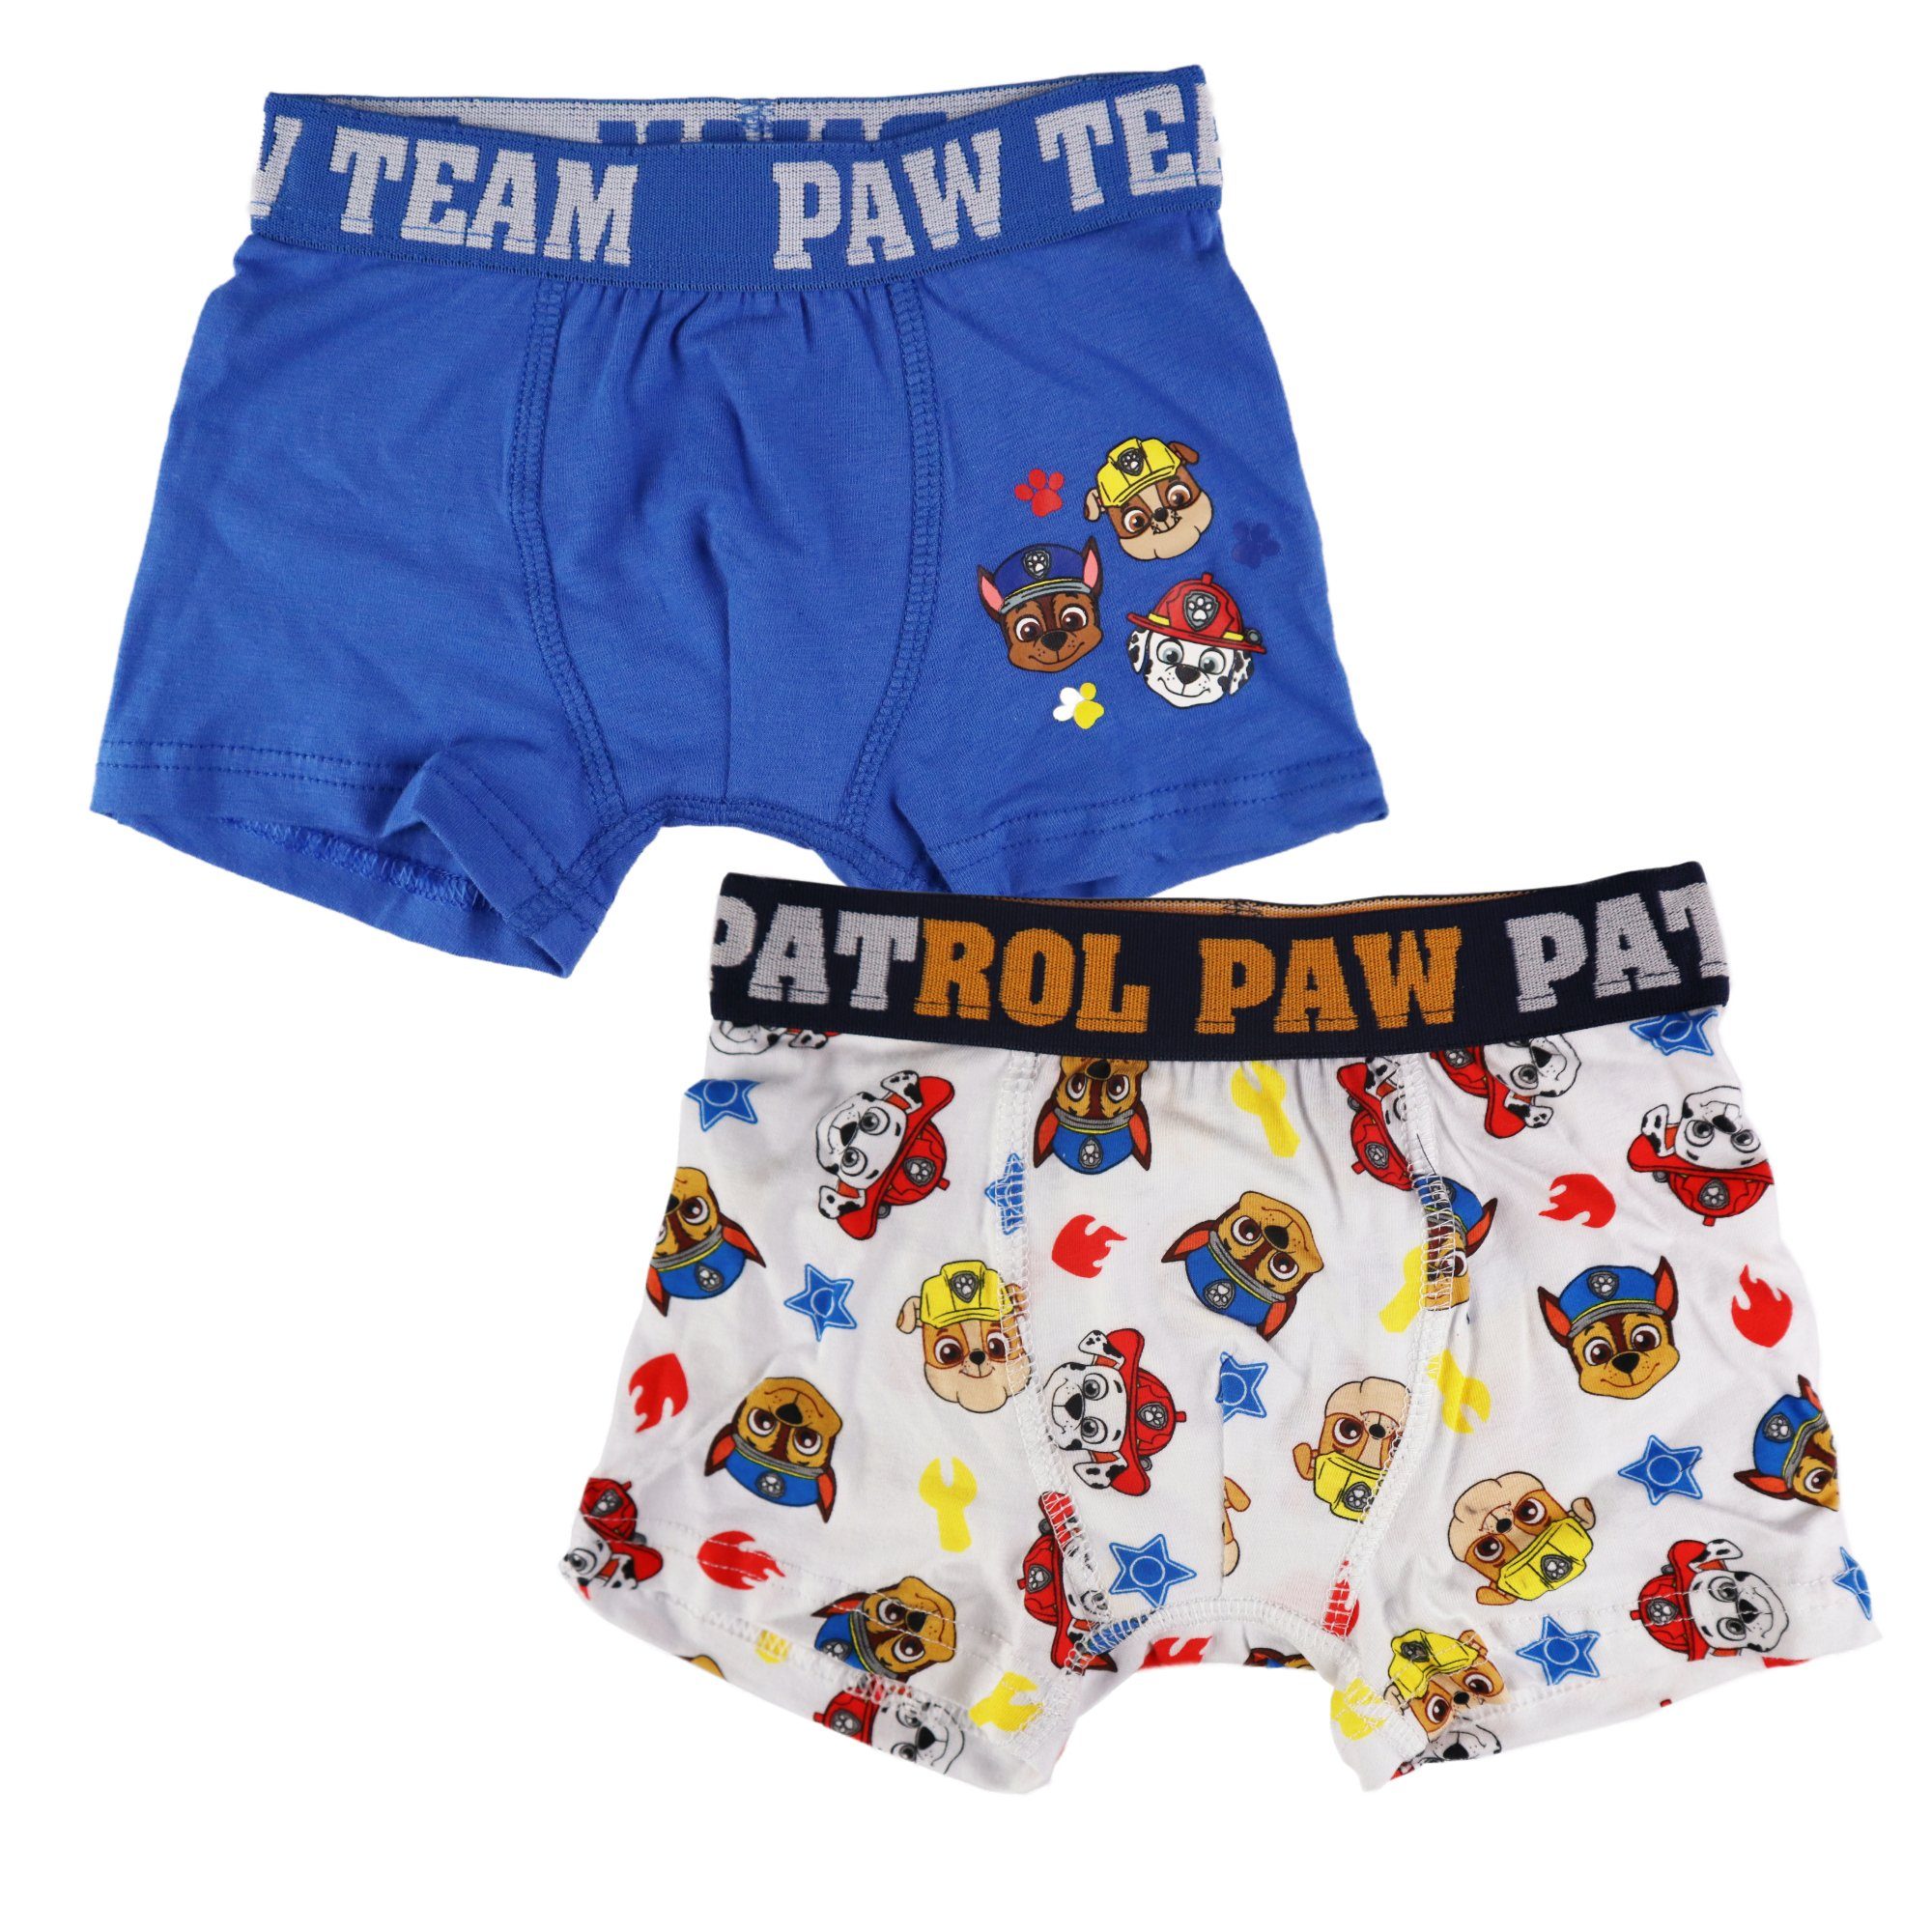 PAW PATROL Boxershorts Paw Patrol Jungen Kinder Shorts im 2-er Pack Gr. 98  bis 128